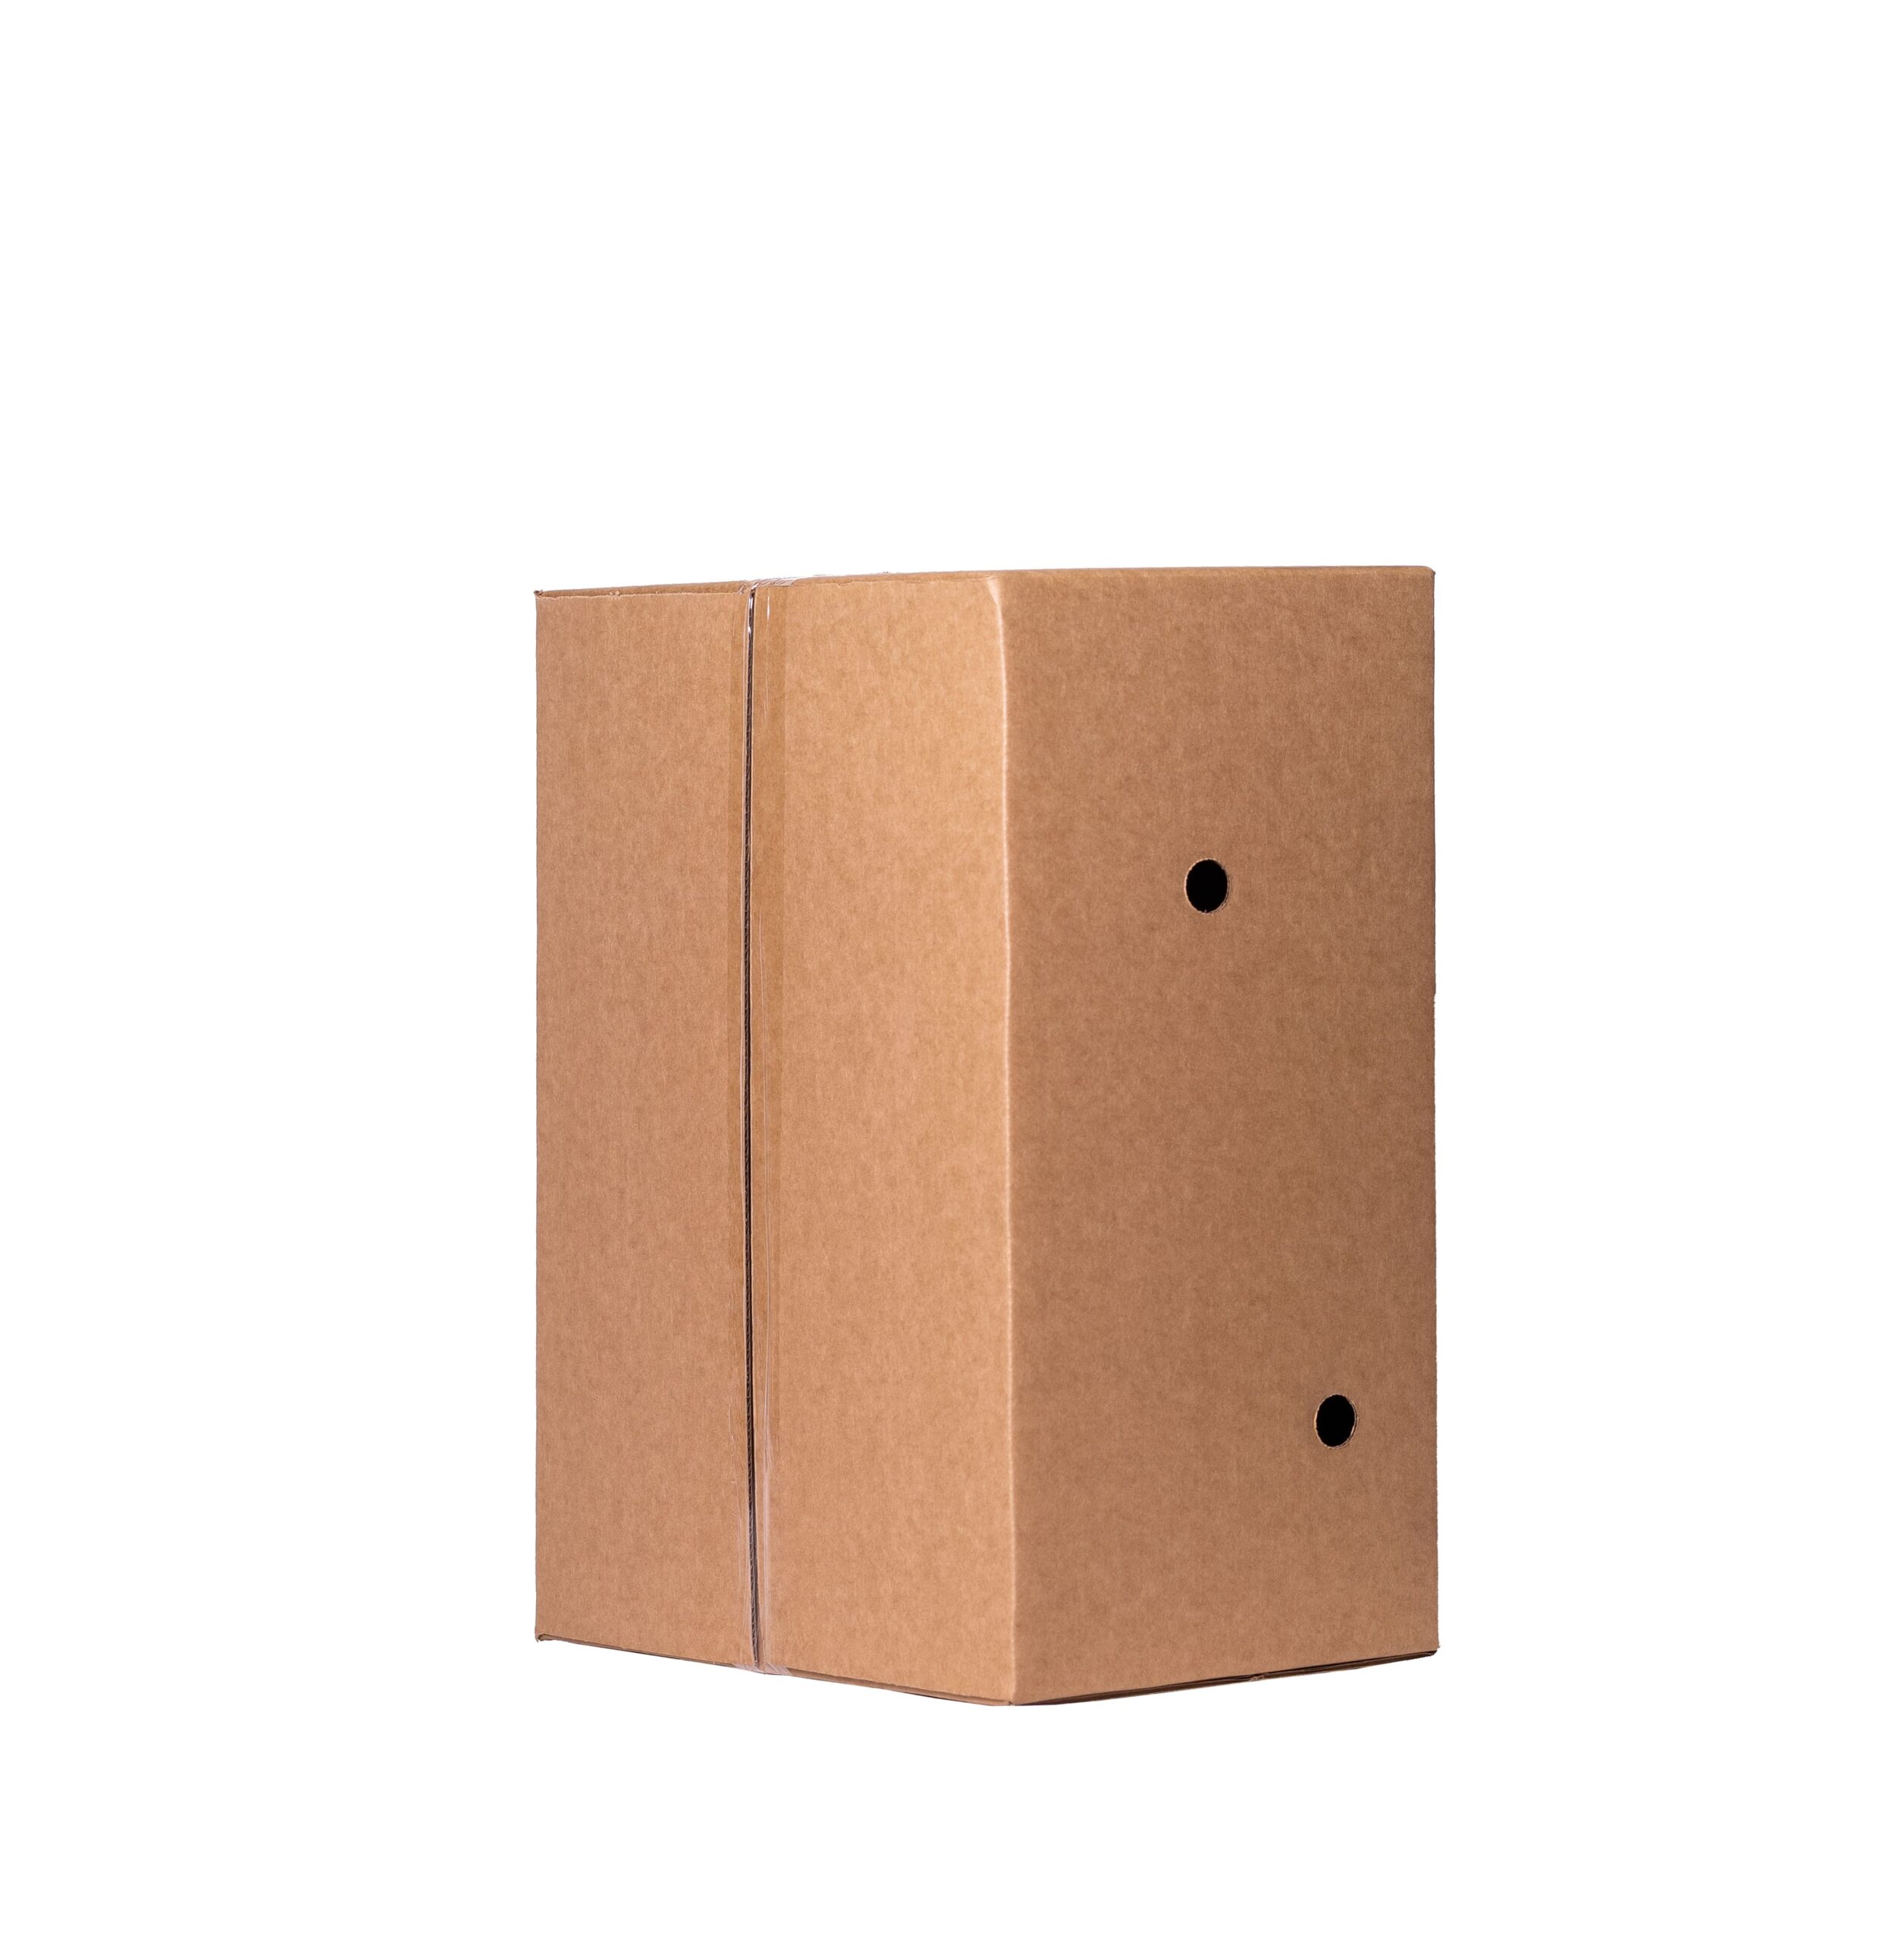 Sorrel Carton (20 x 16 x 9) Front-Side Upright